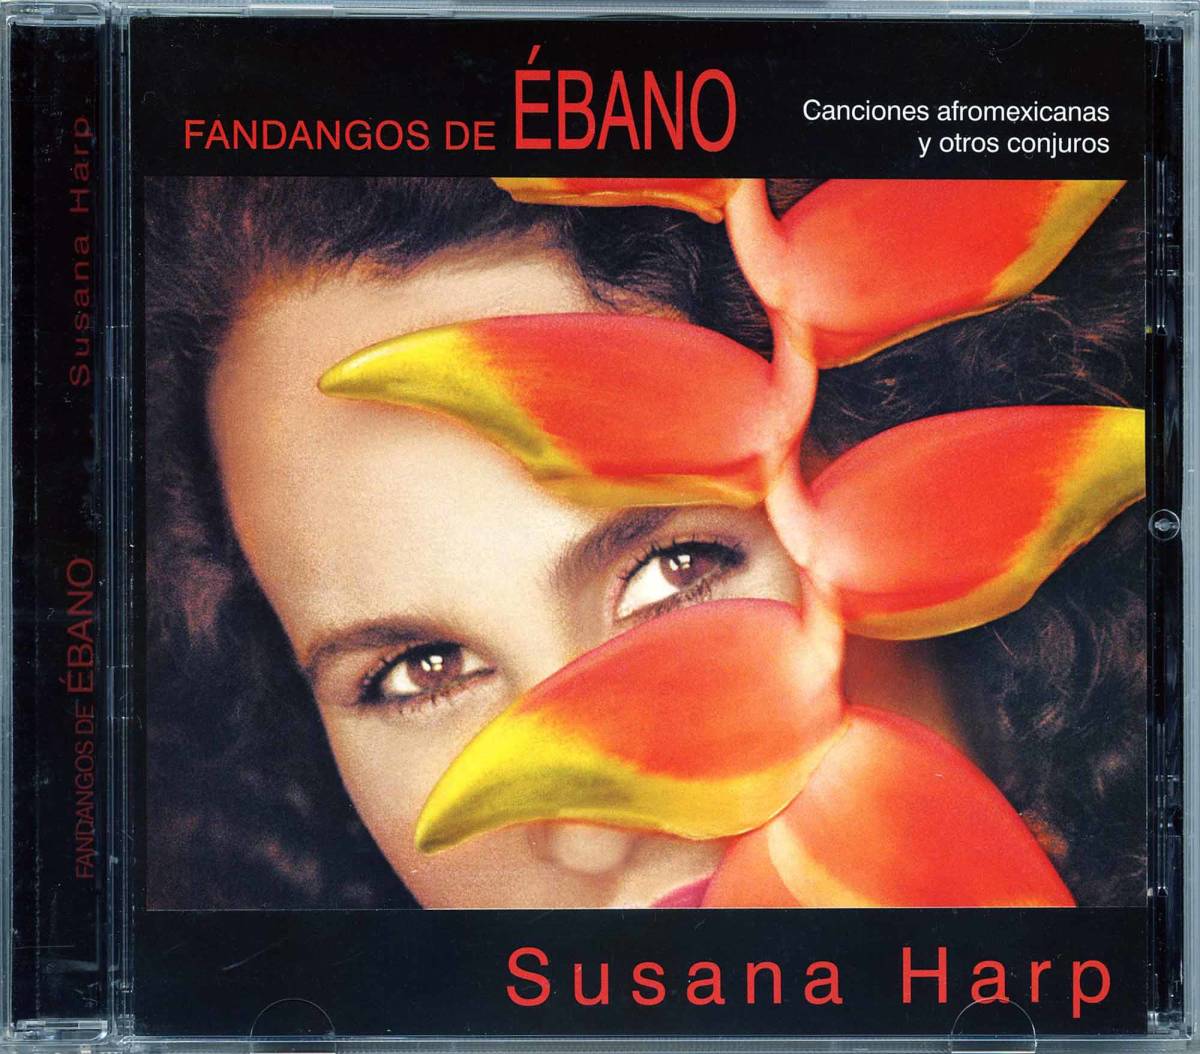 Susana Harp（スサナ・ハープ）CD「Fandangos de ebano」メキシコ盤オリジナル XQFE006 スリップケース他完品 新品同様_画像3